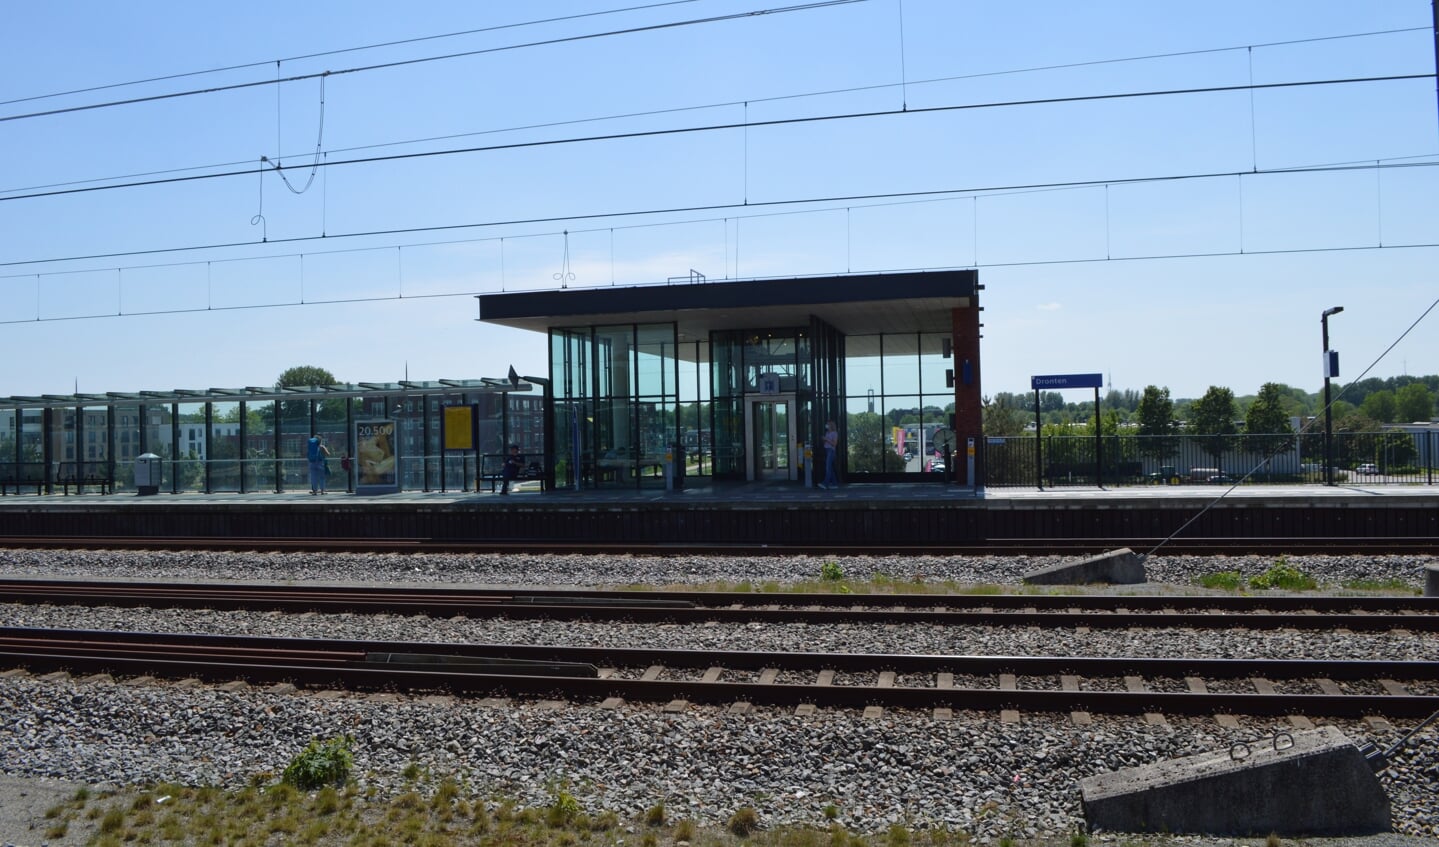 Station Dronten